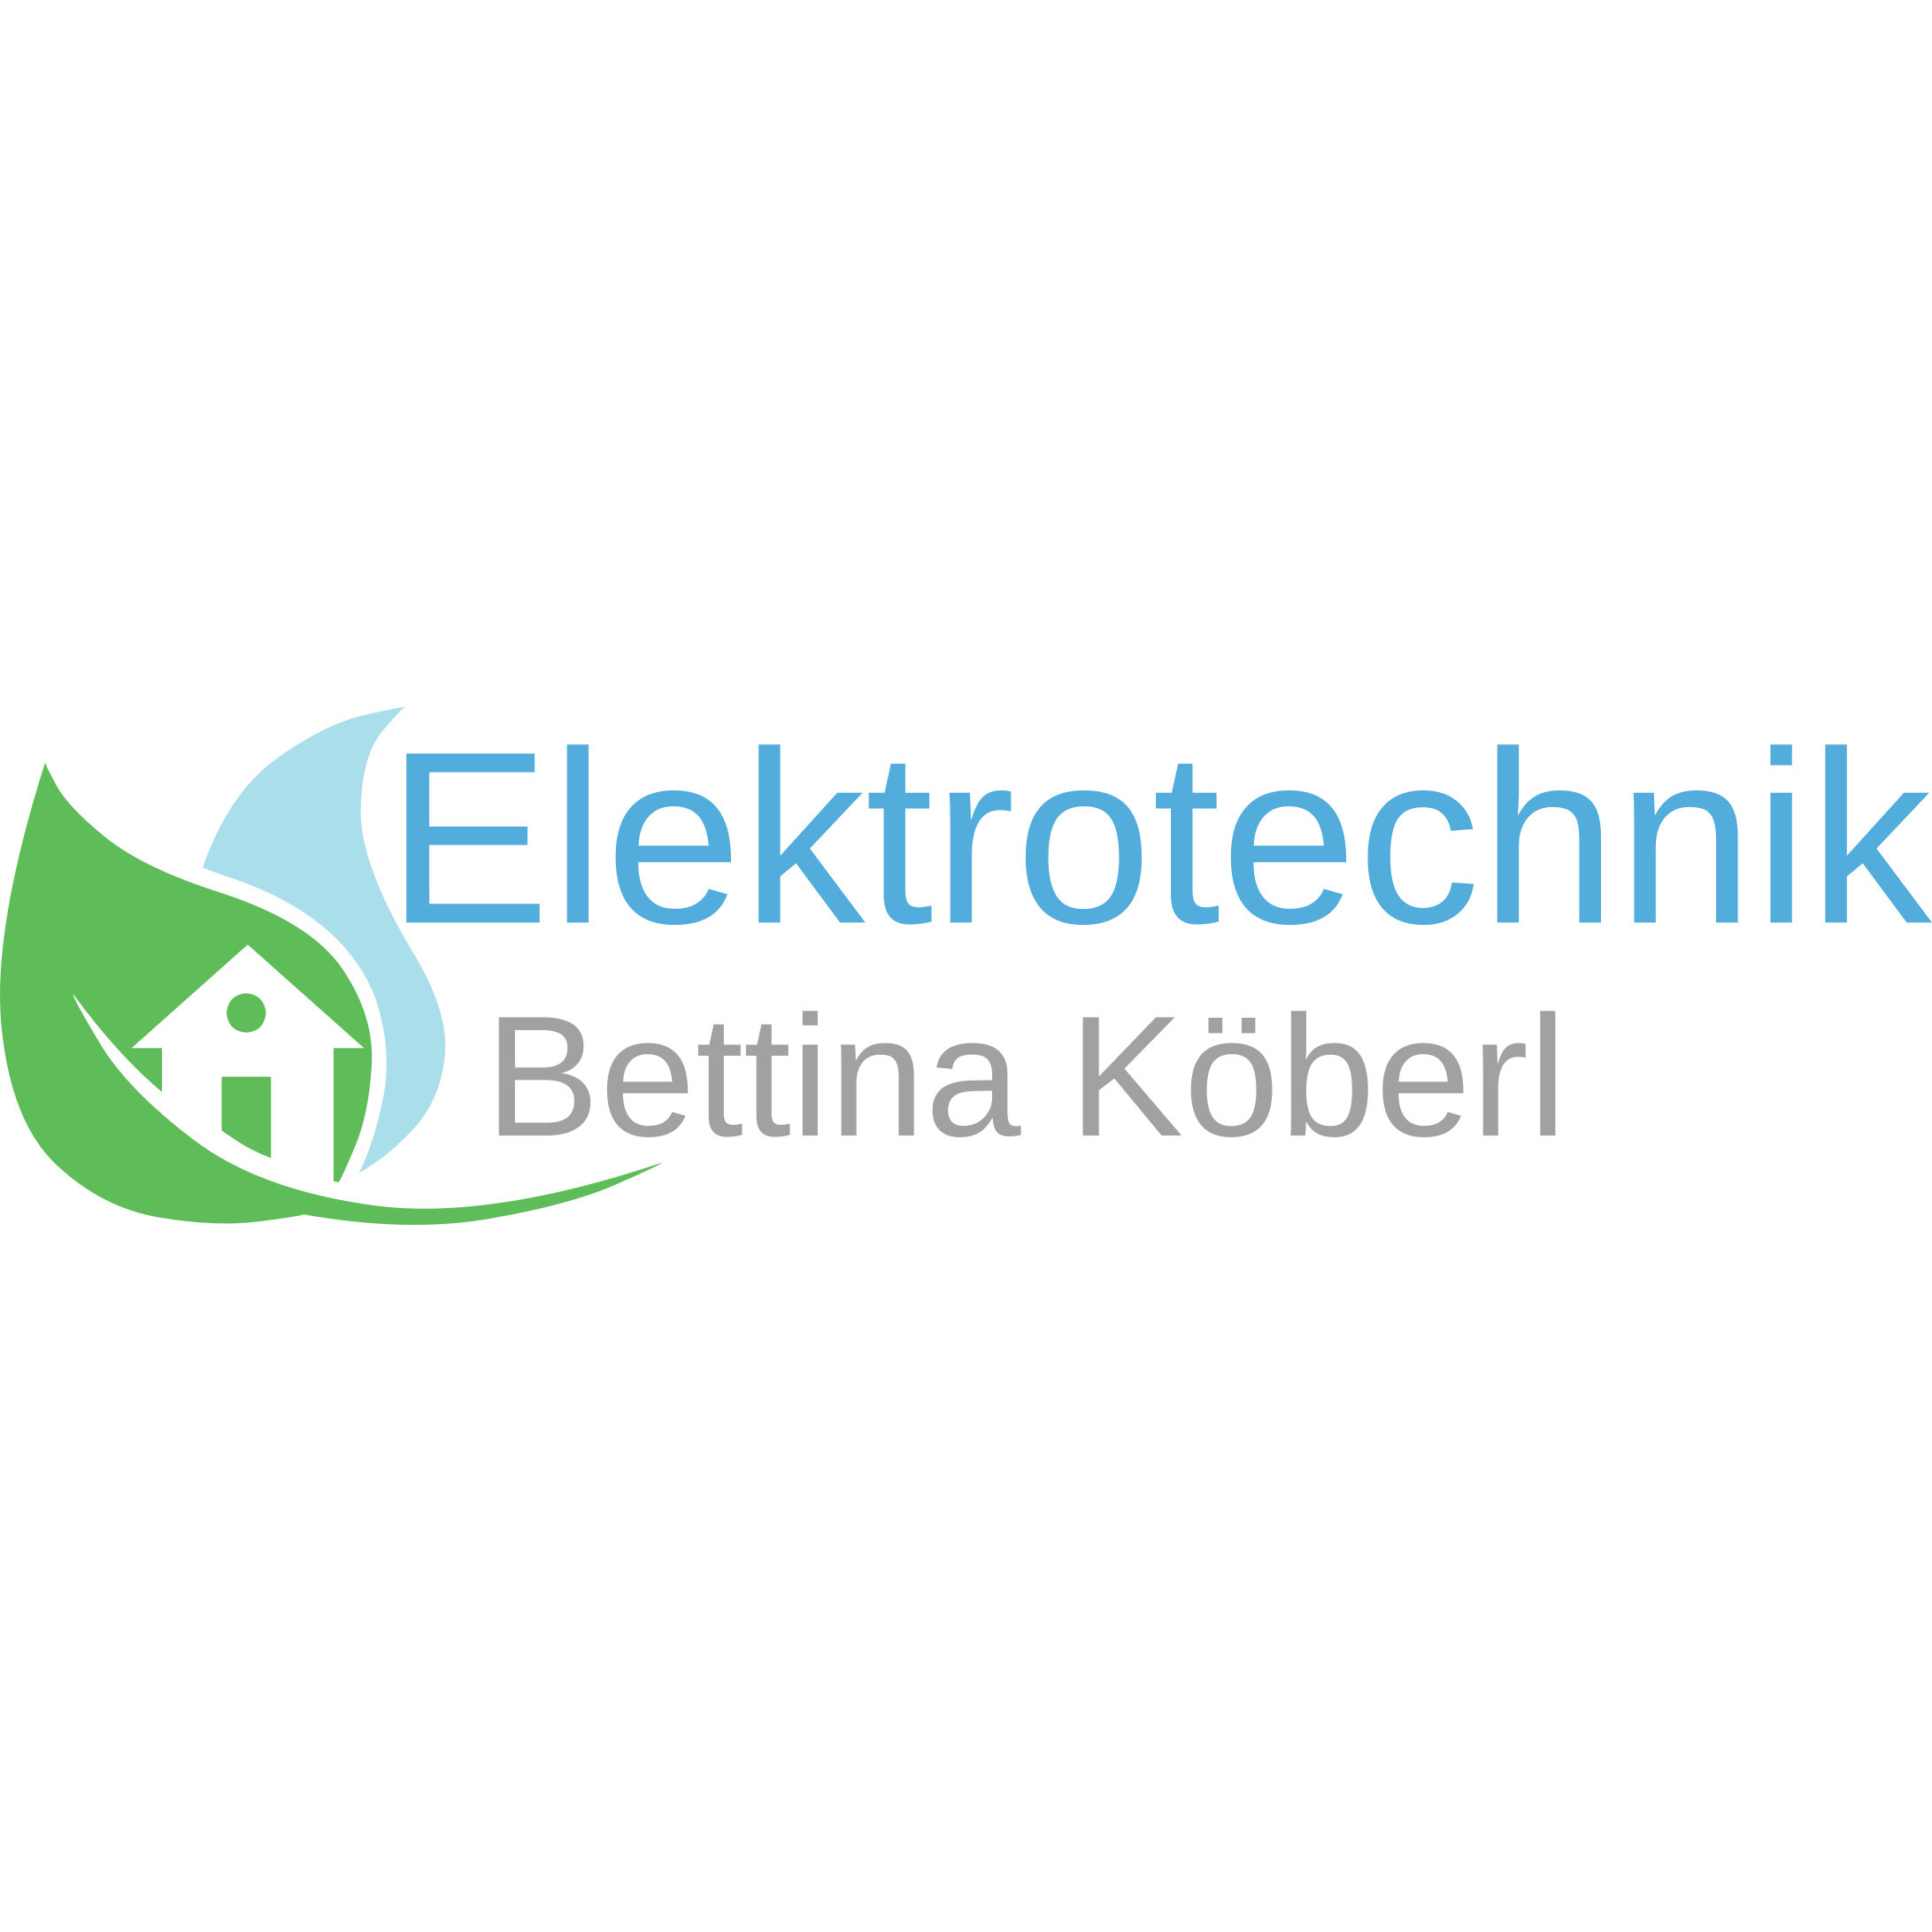 Elektrotechinik Bettina Köberl